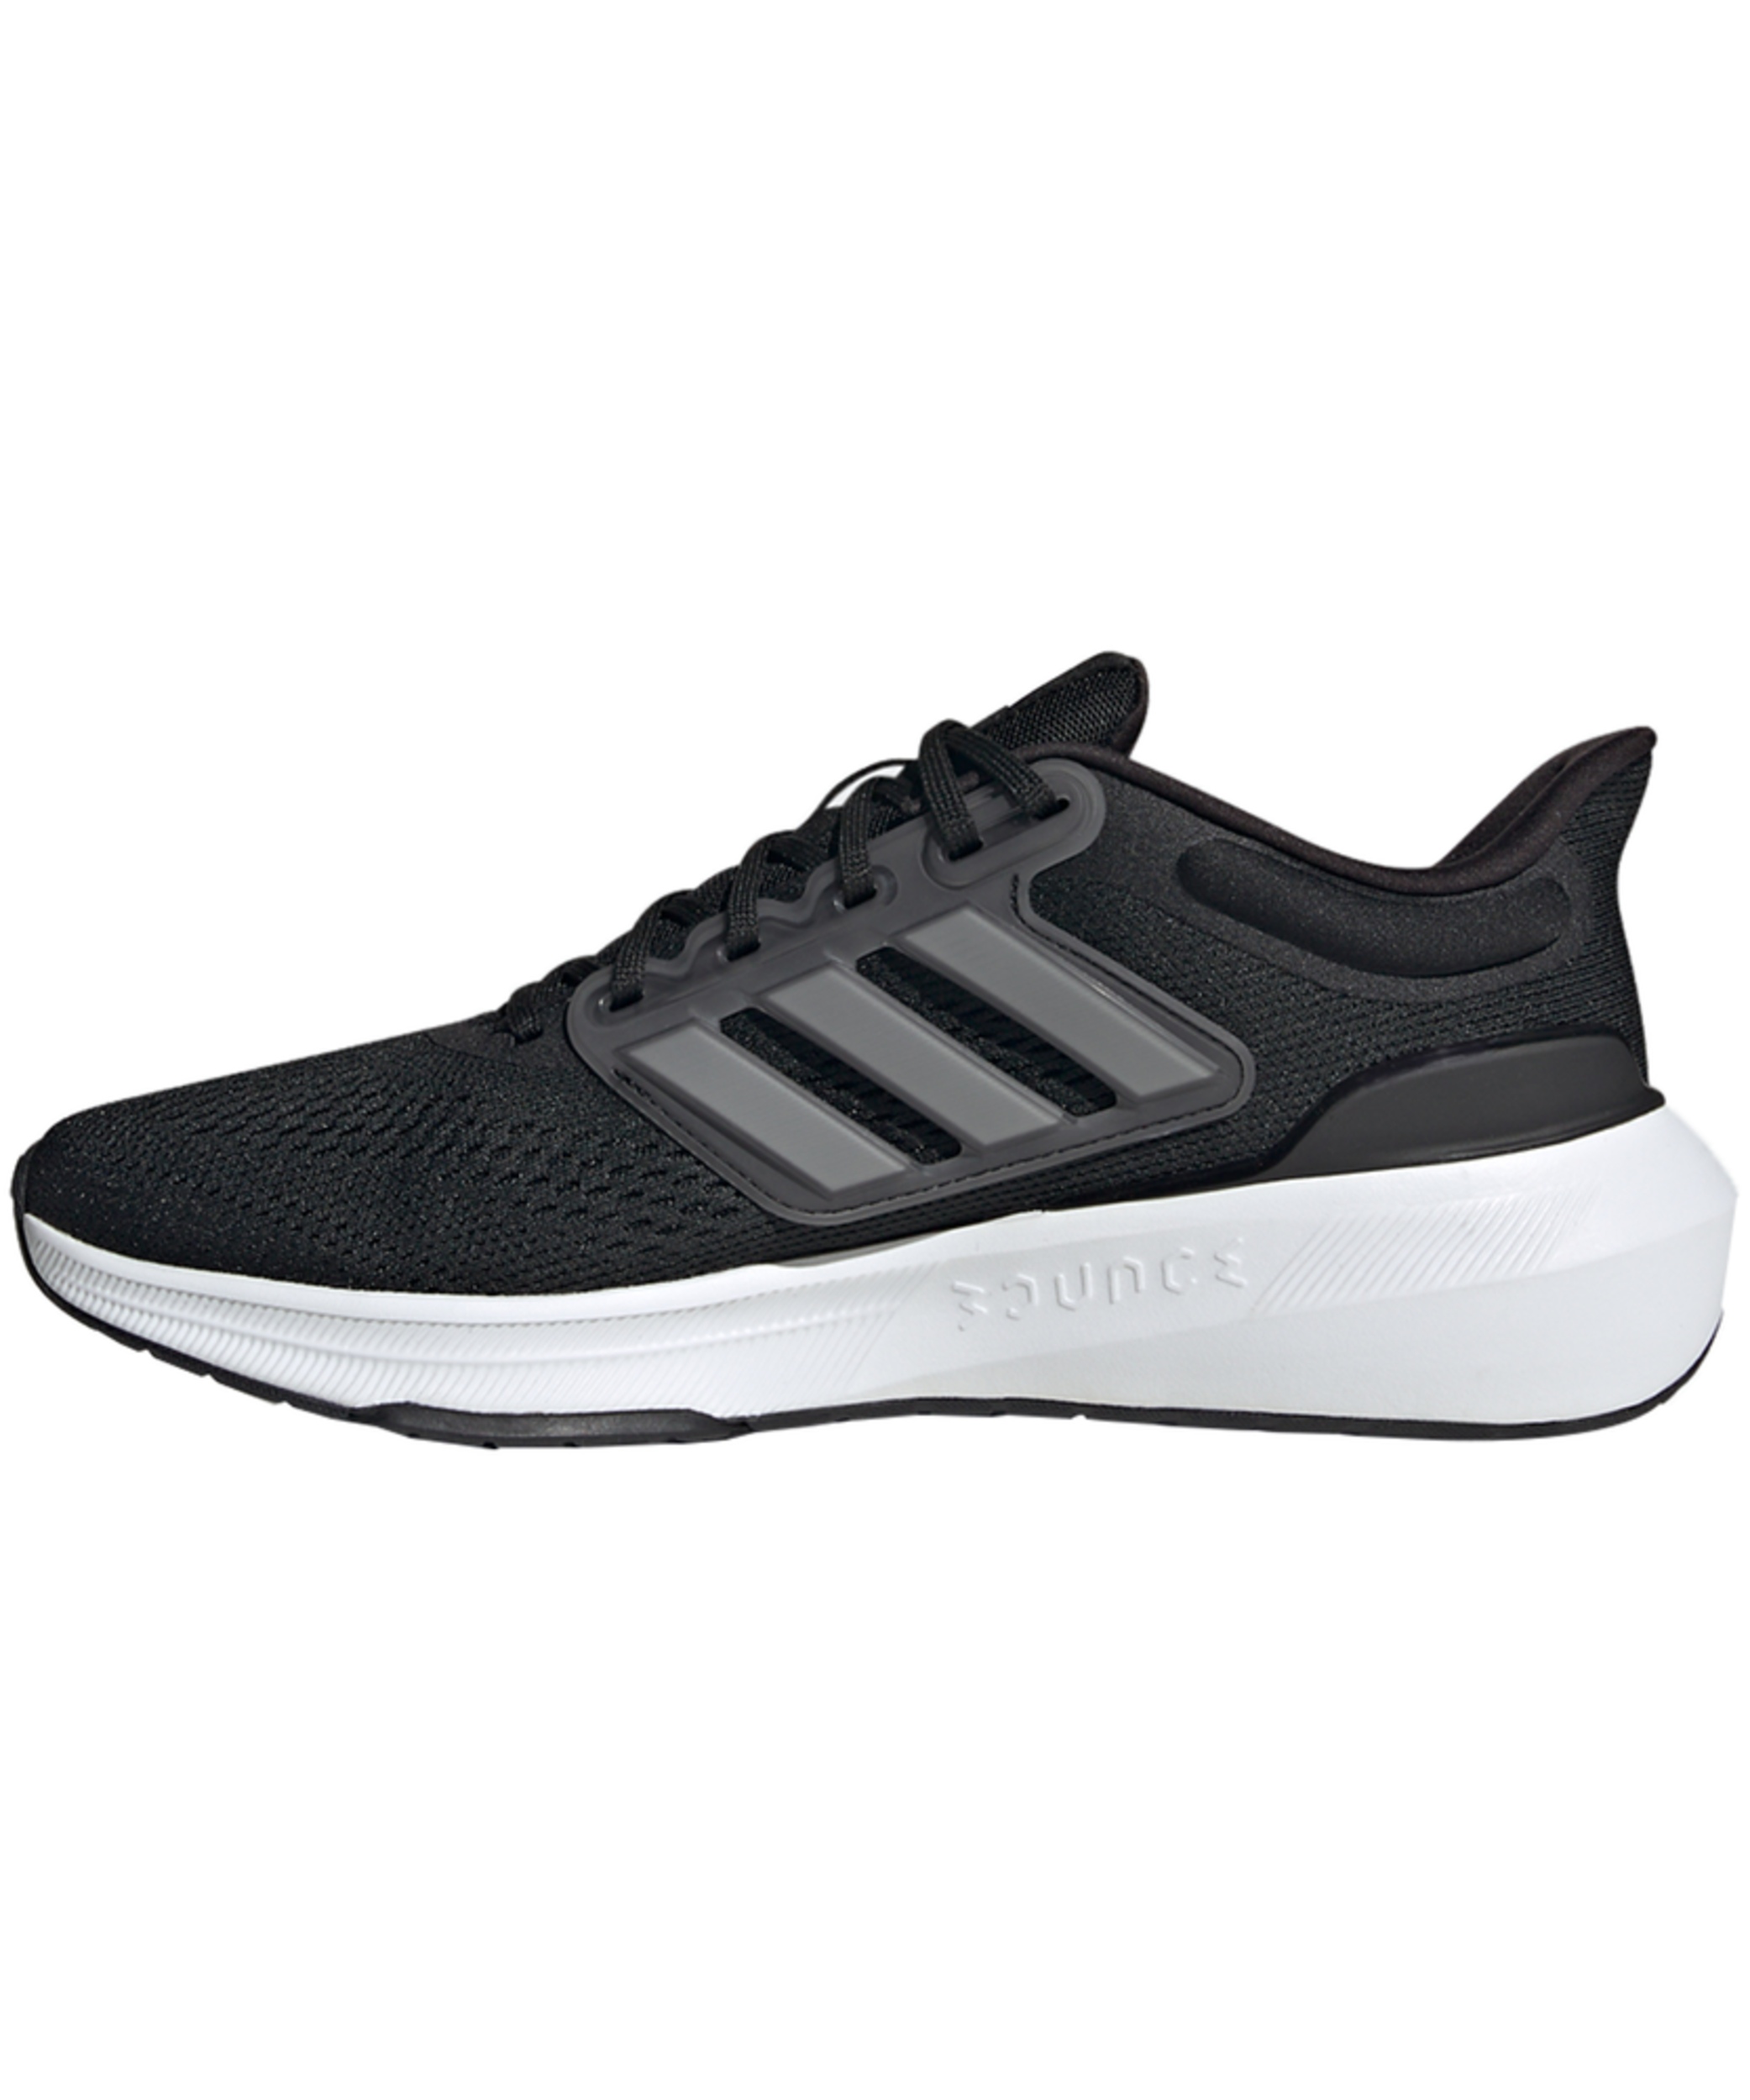 adidas Men's Ultrabounce Running Shoes - Black/White | Marks